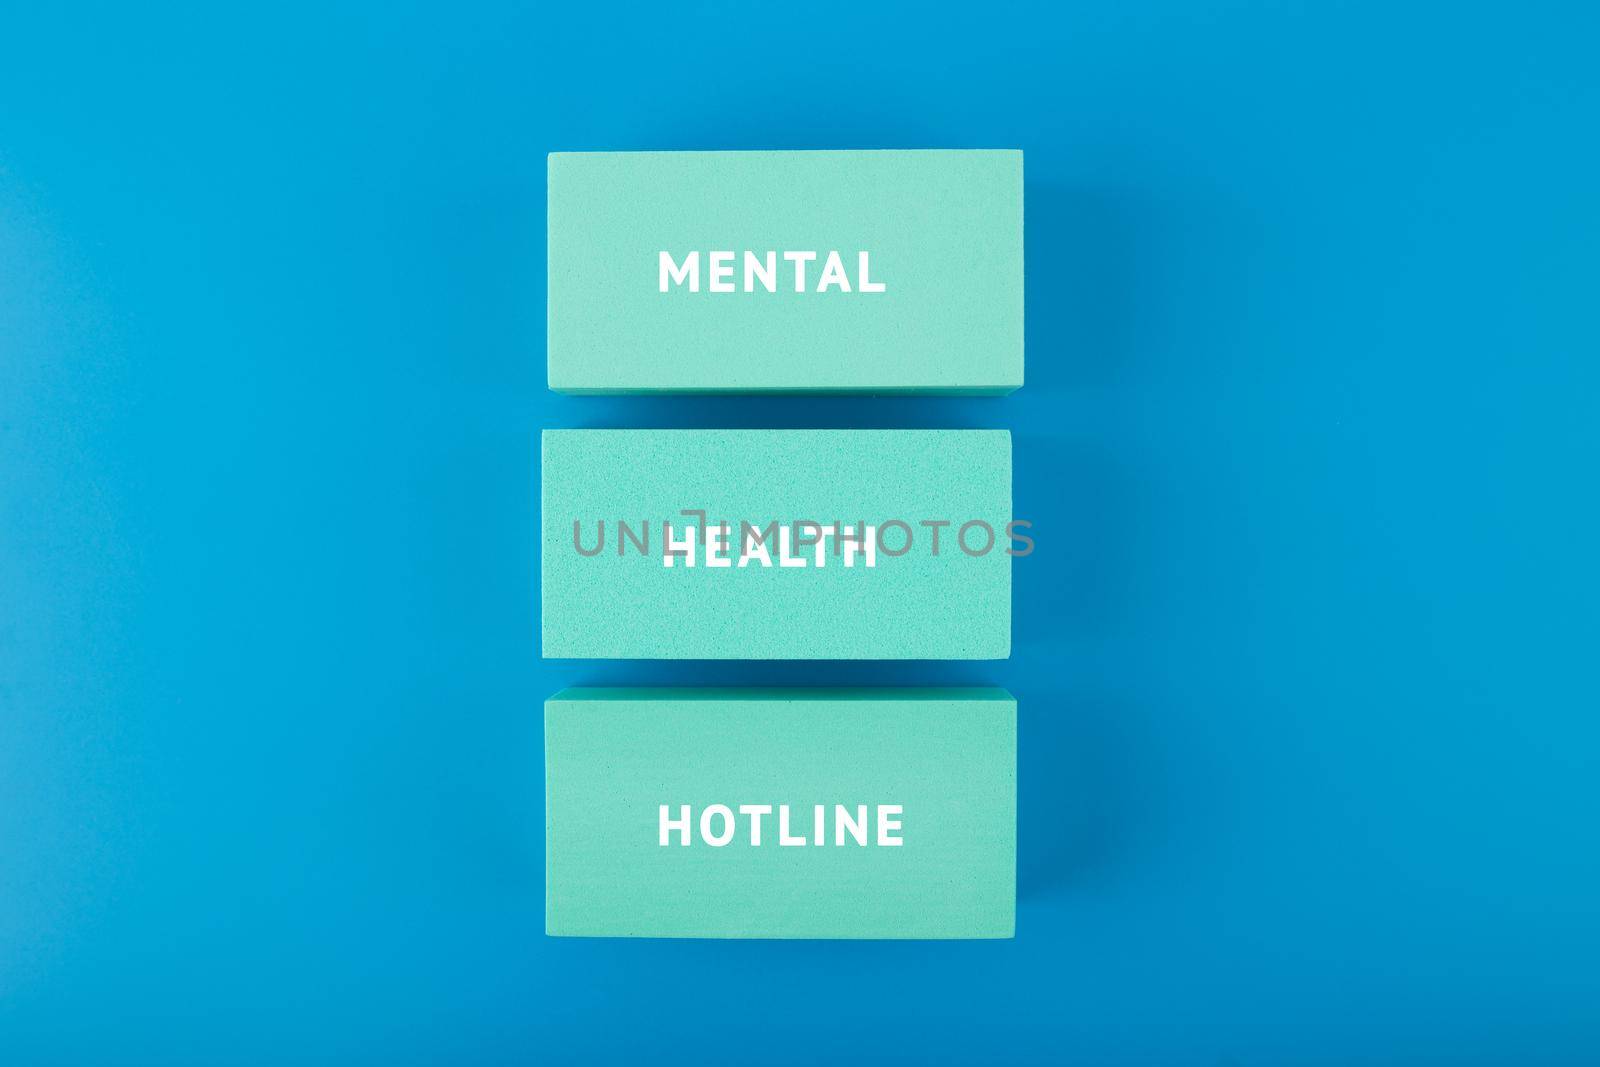 Mental health hotline minimal concept in blue monochromatic colors by Senorina_Irina